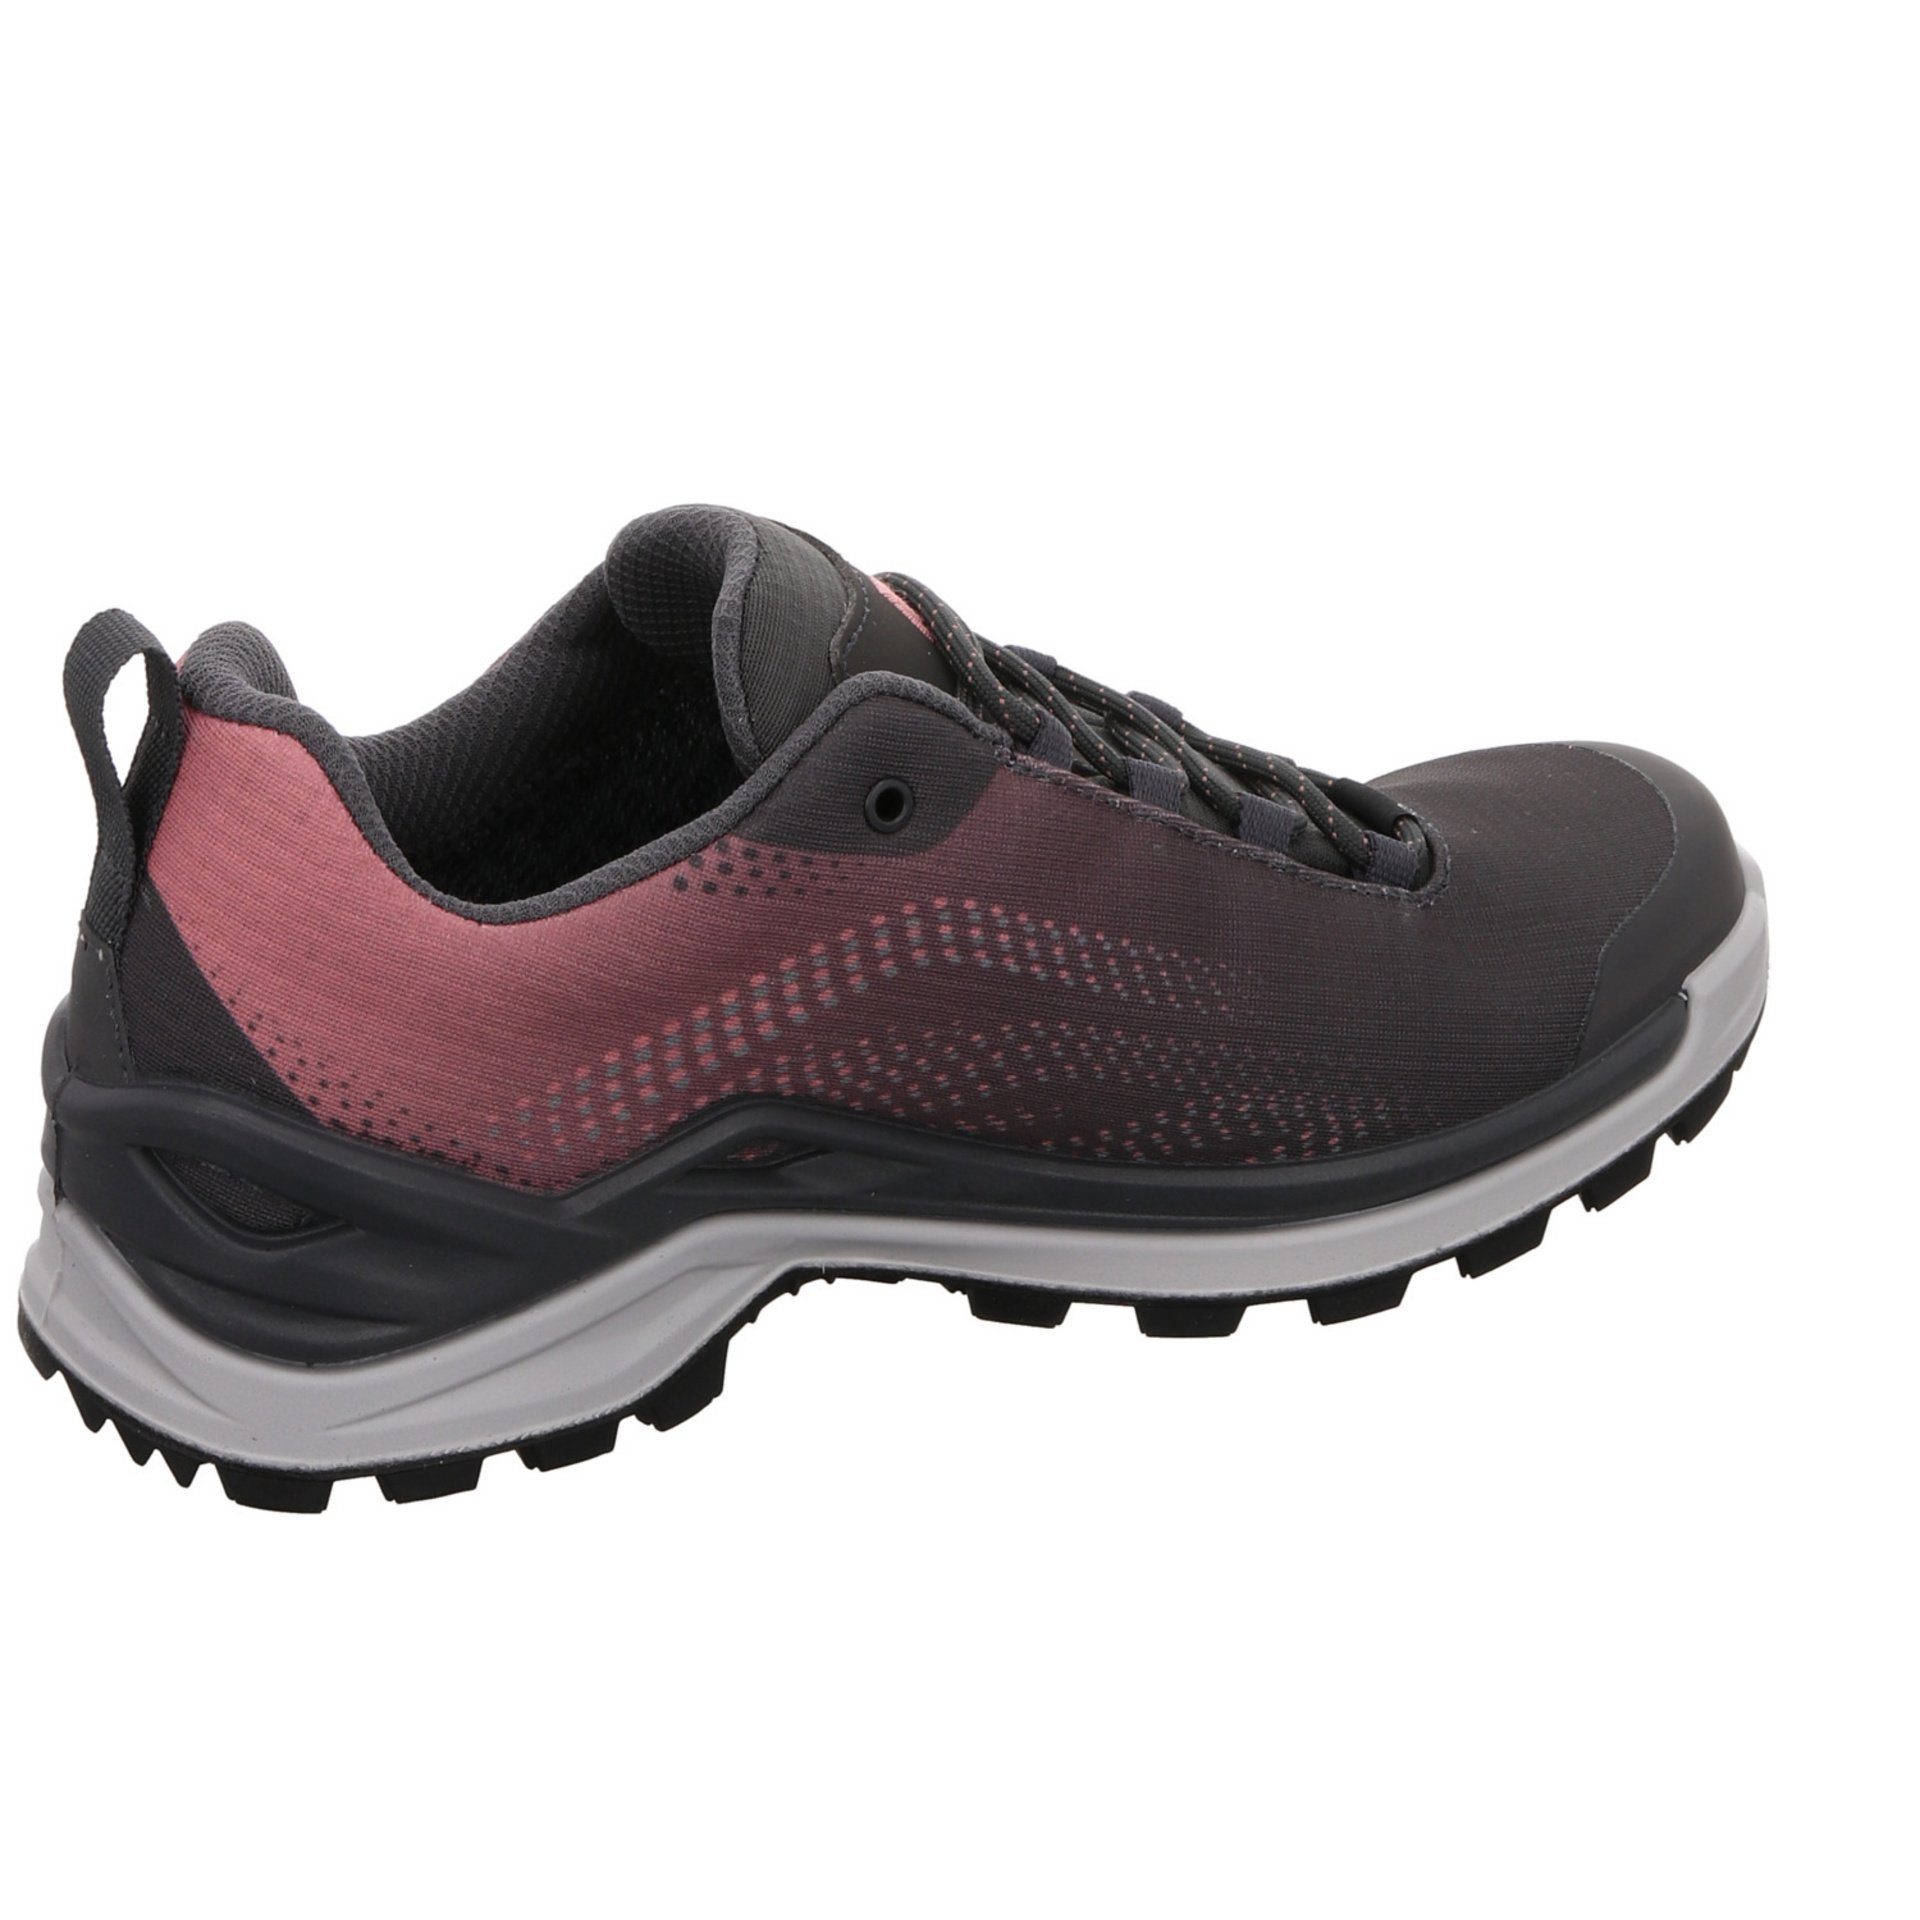 Damen Lo Outdoorschuh (201) Schuhe Lowa Outdoor GTX anthrazit Zirrox Outdoorschuh Synthetikkombination